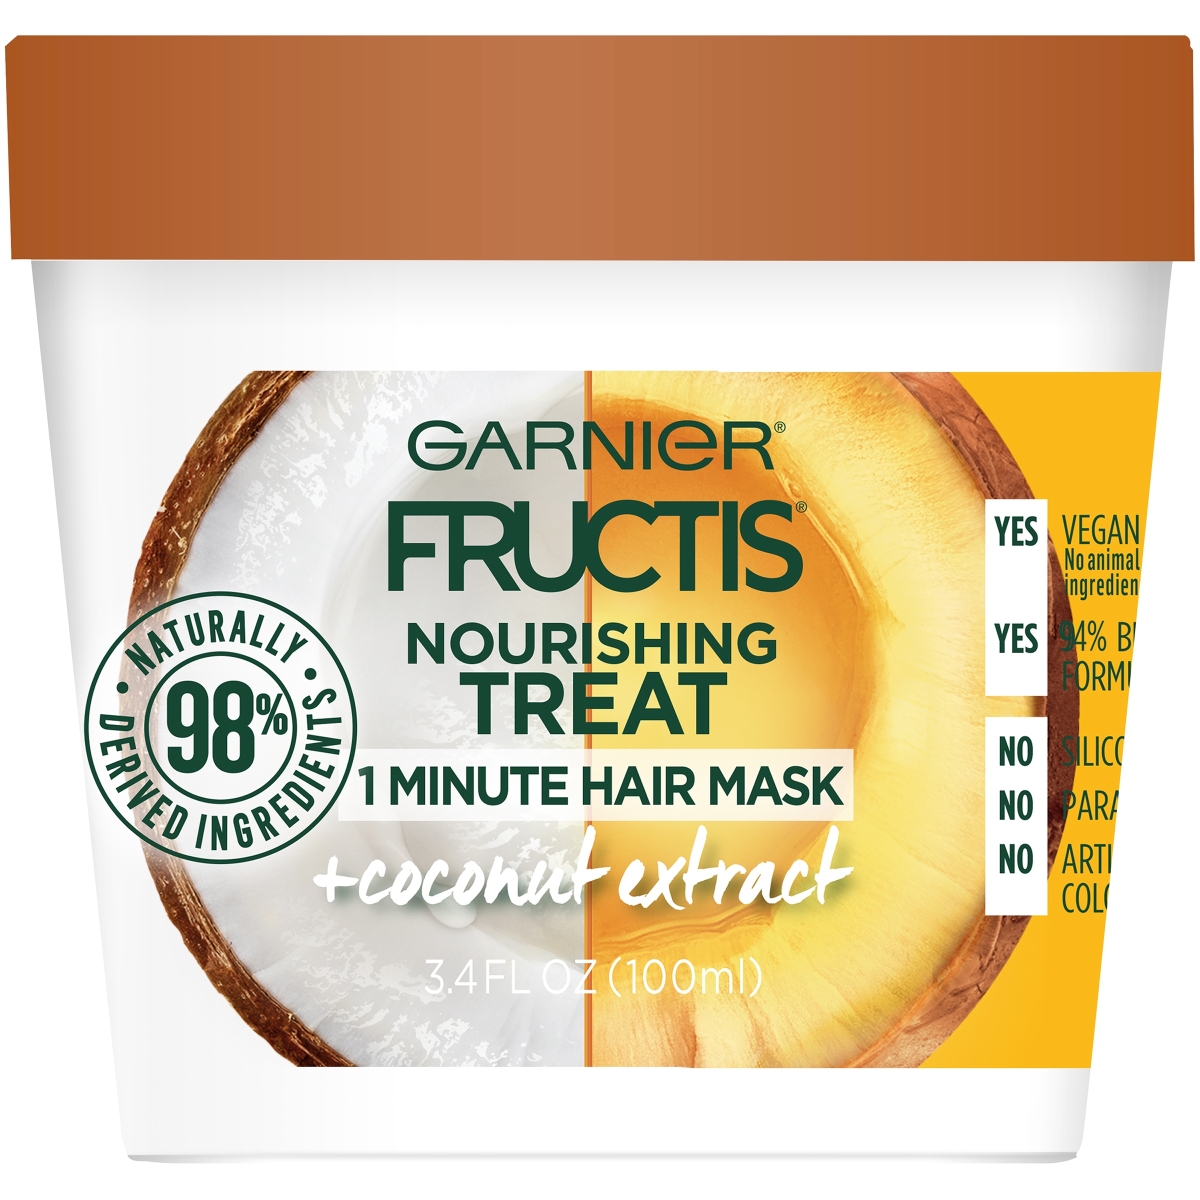 1091301 3.4 Oz Nourishing Treat 1 Minute Hair Mask, Coconut